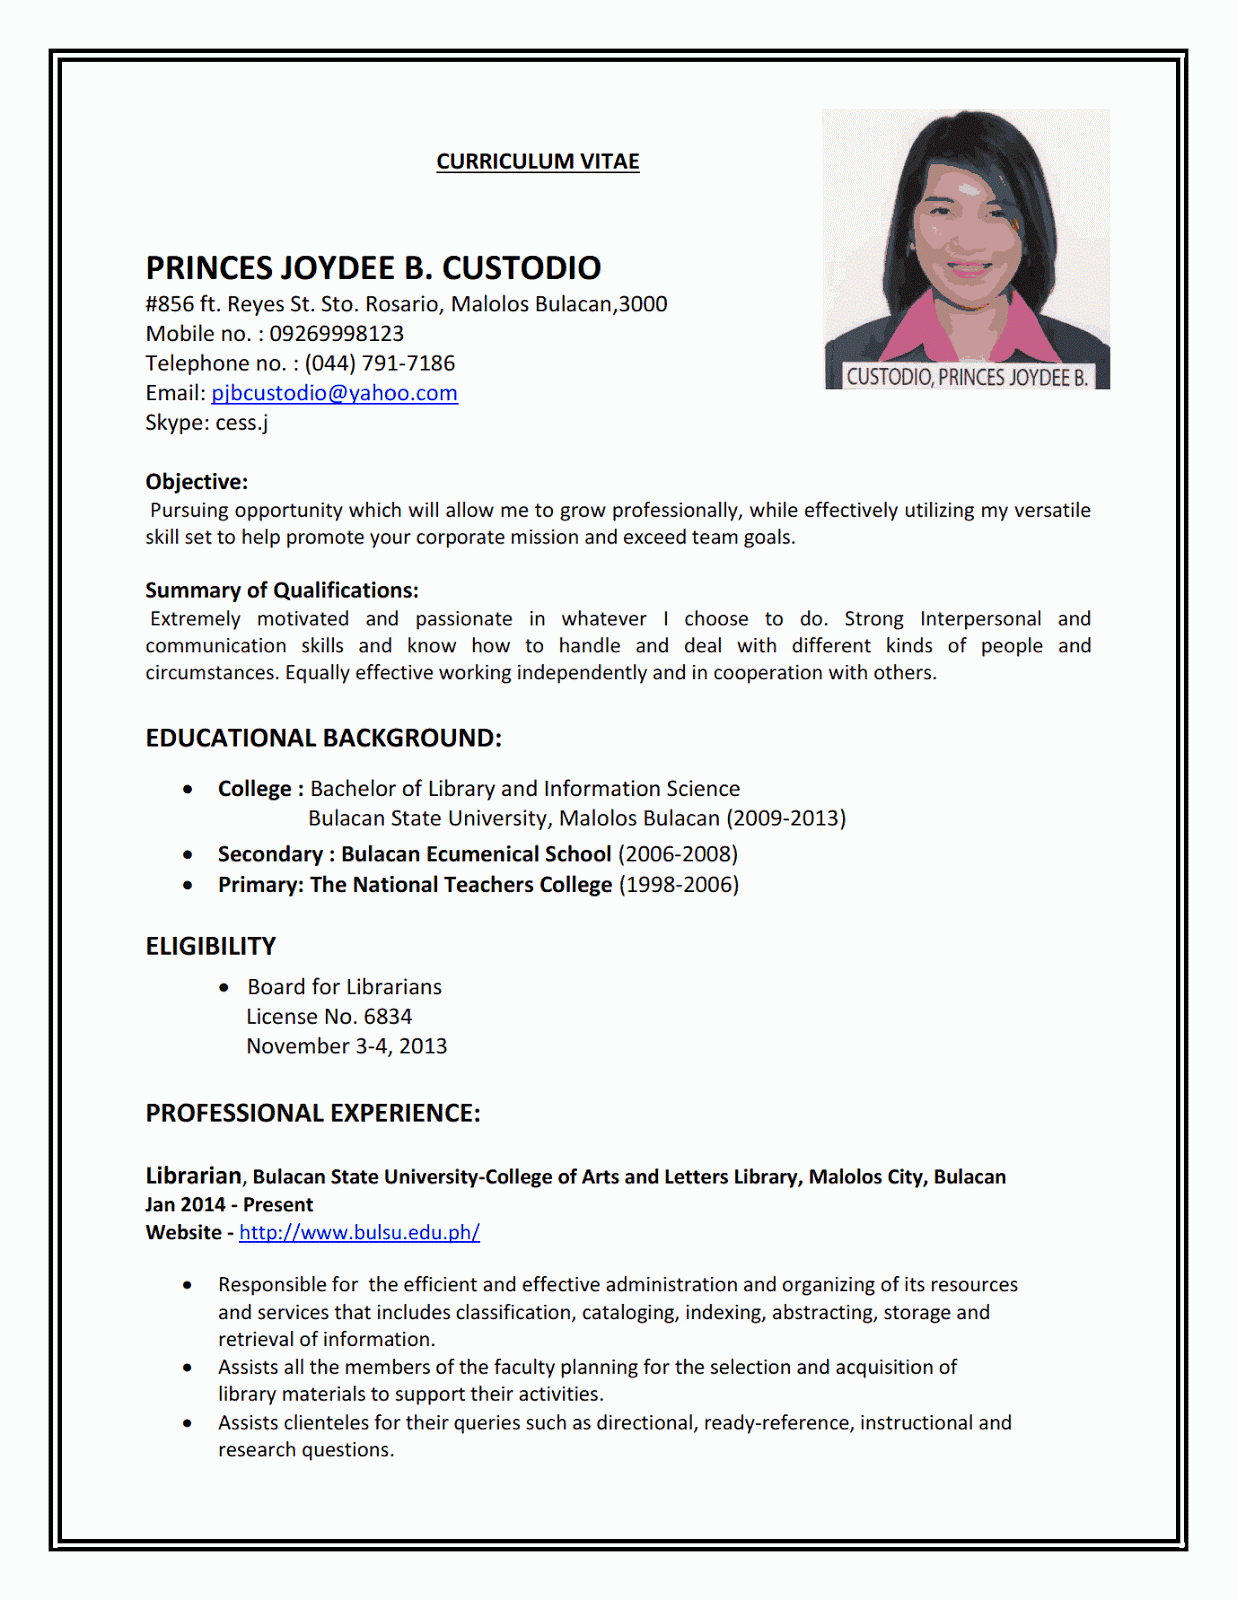 Sample resume job bank